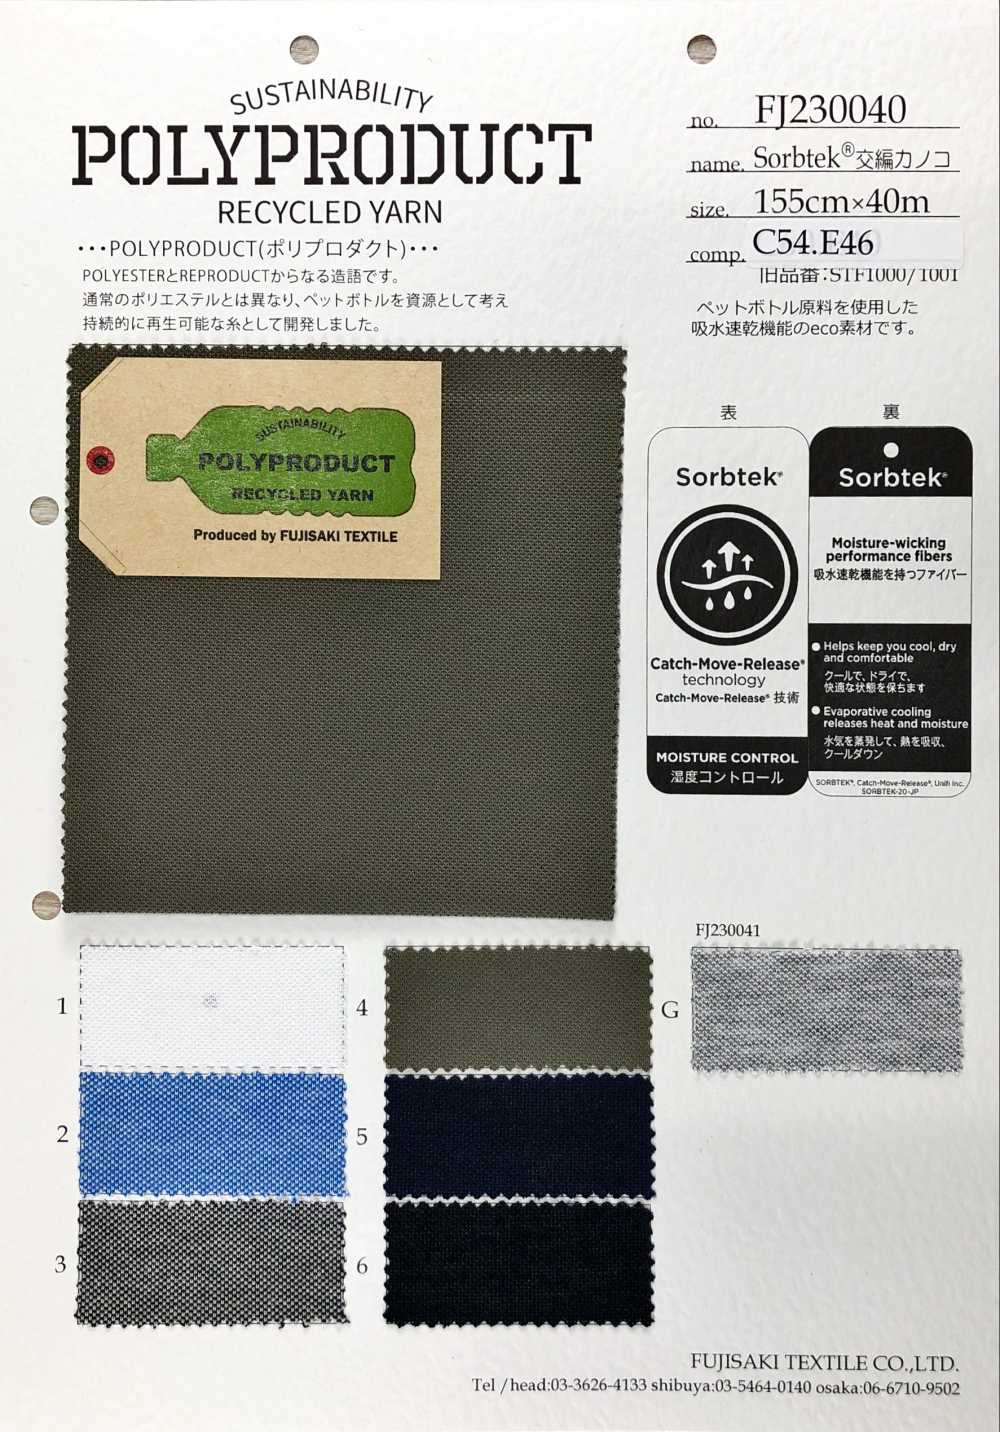 FJ230040 Sorbtek Verschlungener Perlstich[Textilgewebe] Fujisaki Textile